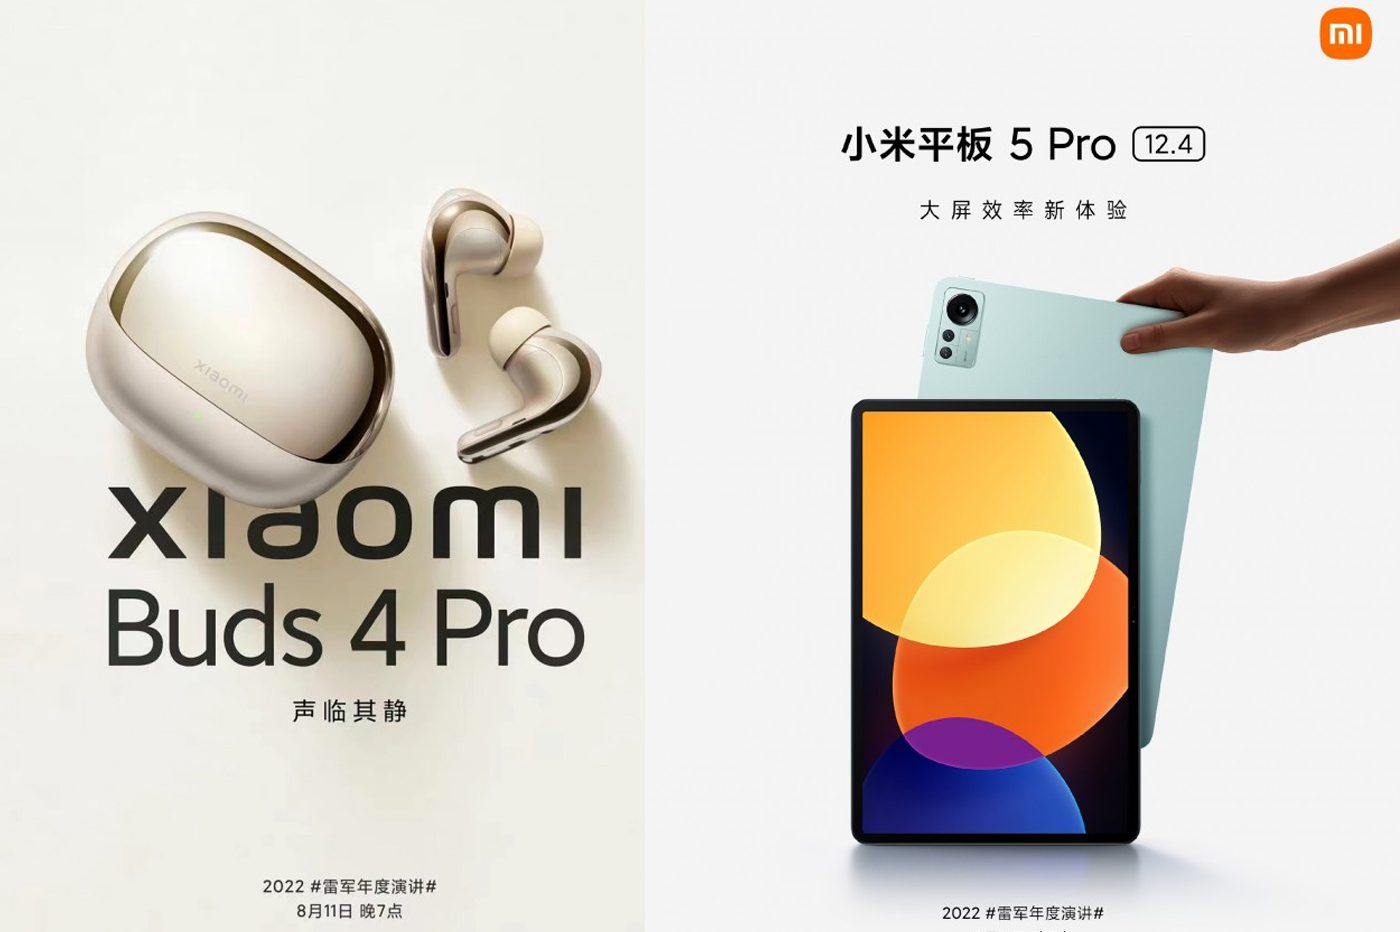 Xiaomi buds 4 pro pad 5 pro